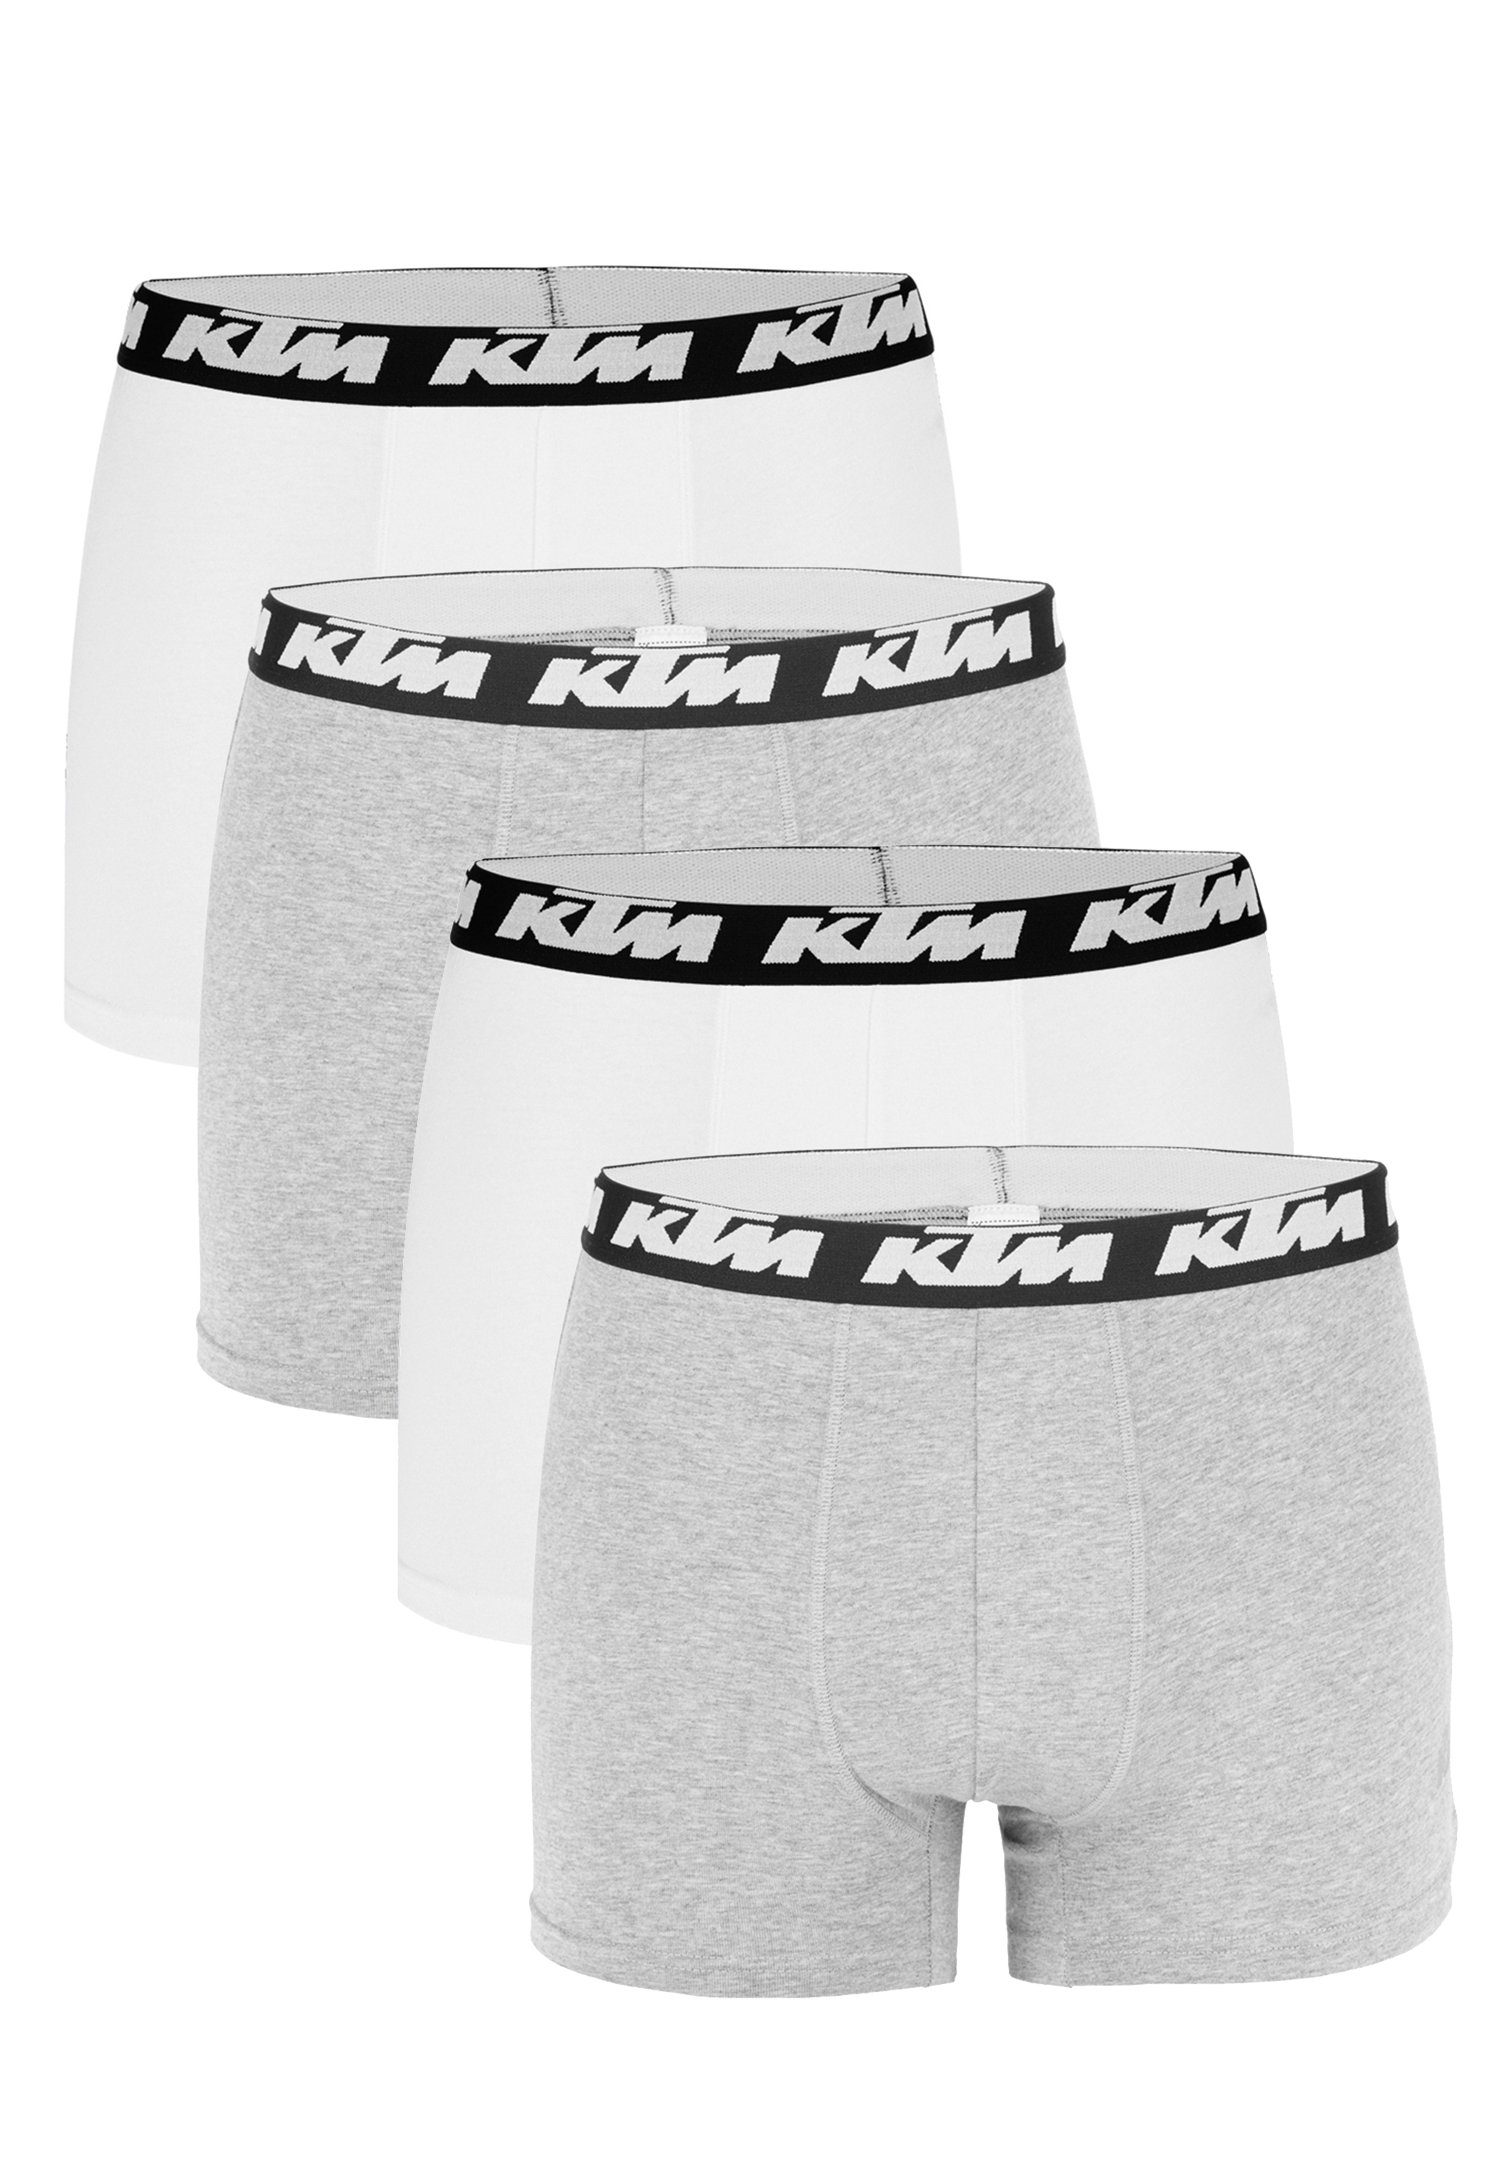 Pack Light Man 4er (Set, White / Grey Boxer Cotton KTM 4er-Pack) 4-St., Boxershorts